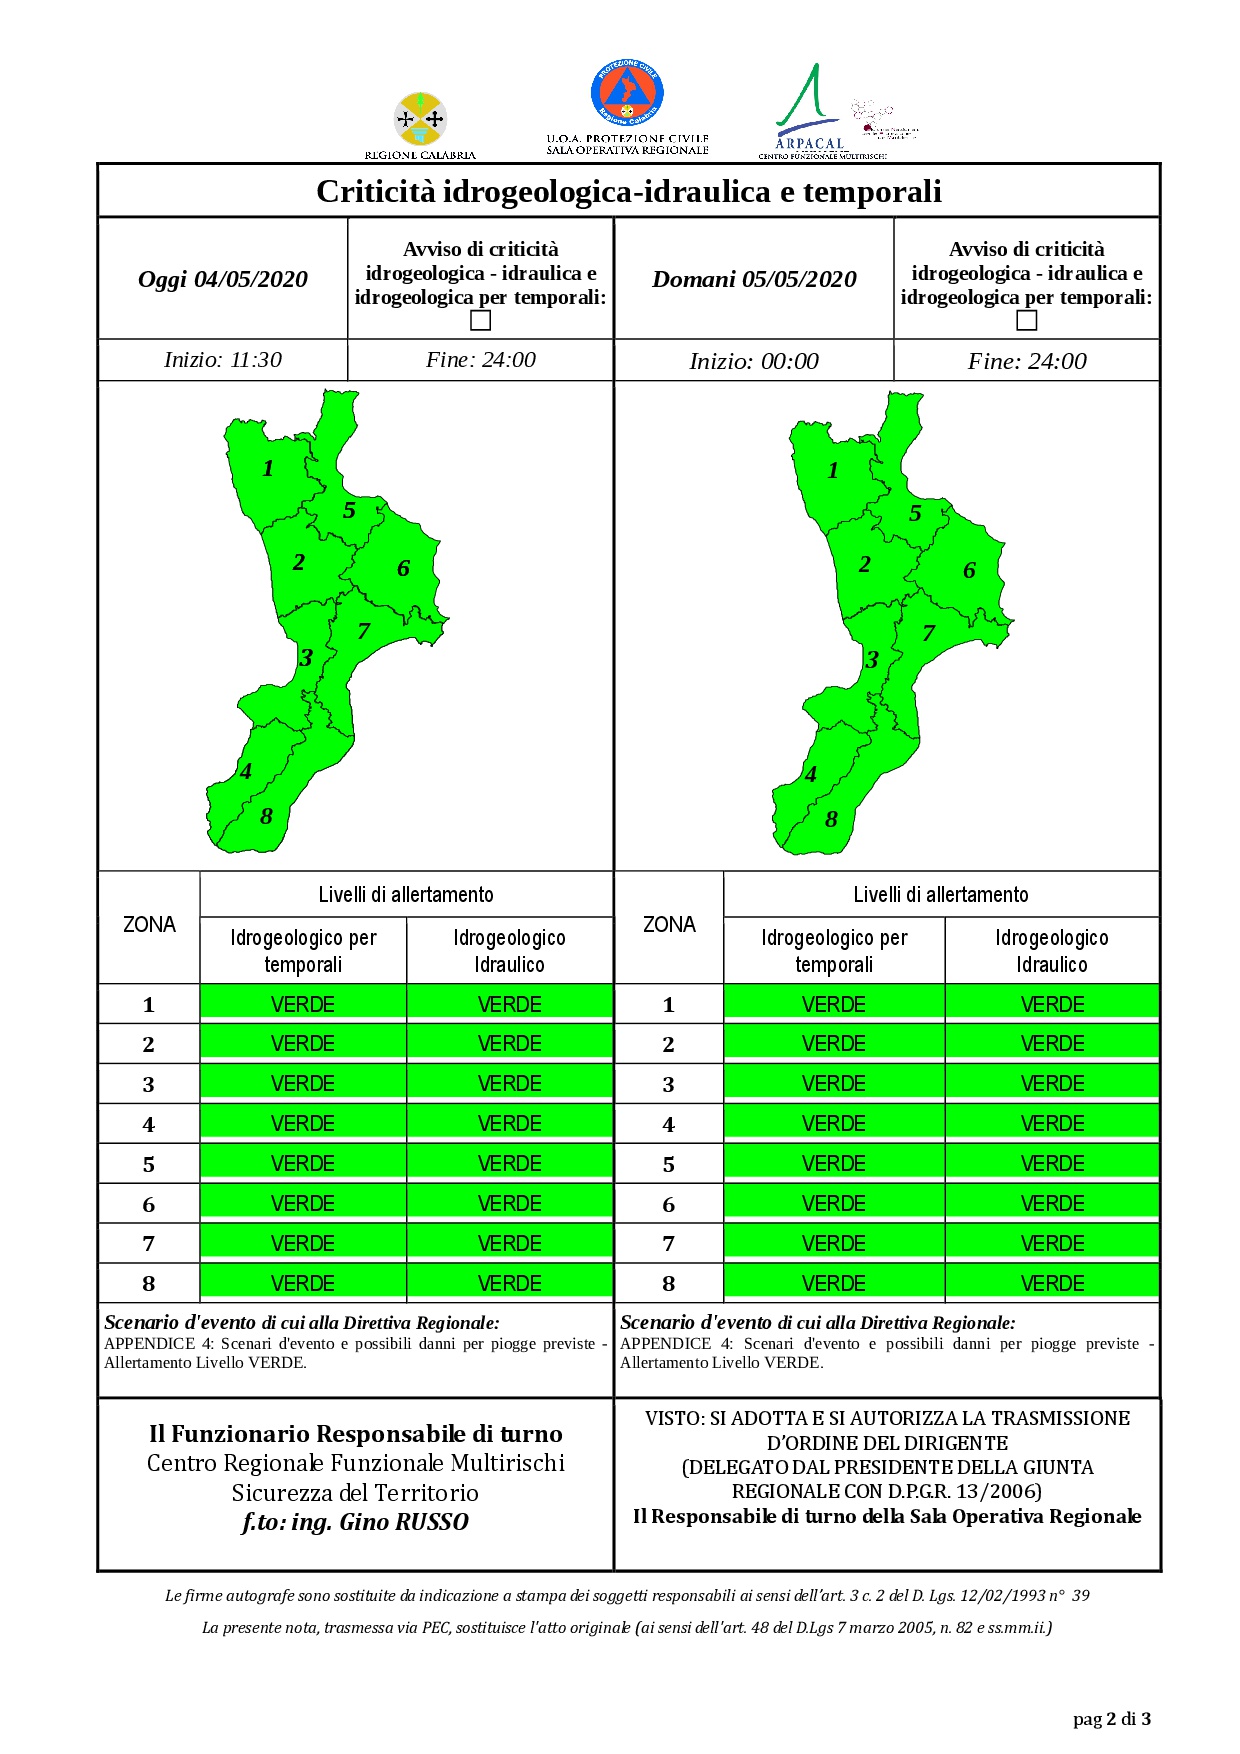 Criticità idrogeologica-idraulica e temporali in Calabria 04-05-2020